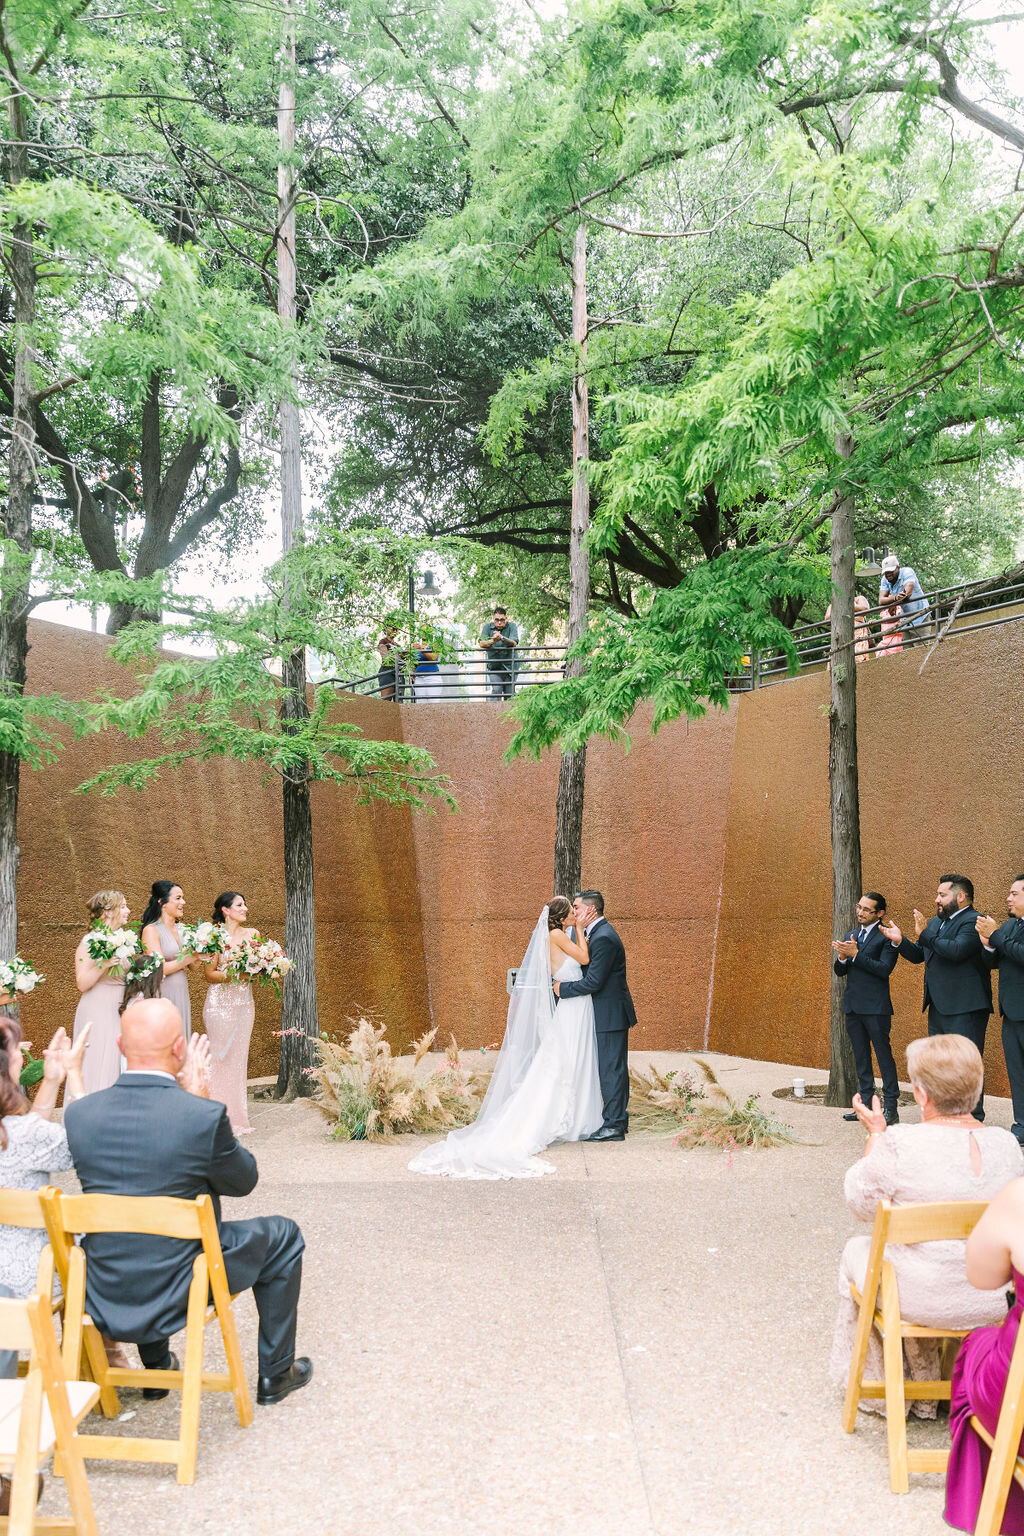 Ellen-Ashton-Photography-Dallas-Wedding-Photographers-Girt-and-gold-events-weddings115.jpg